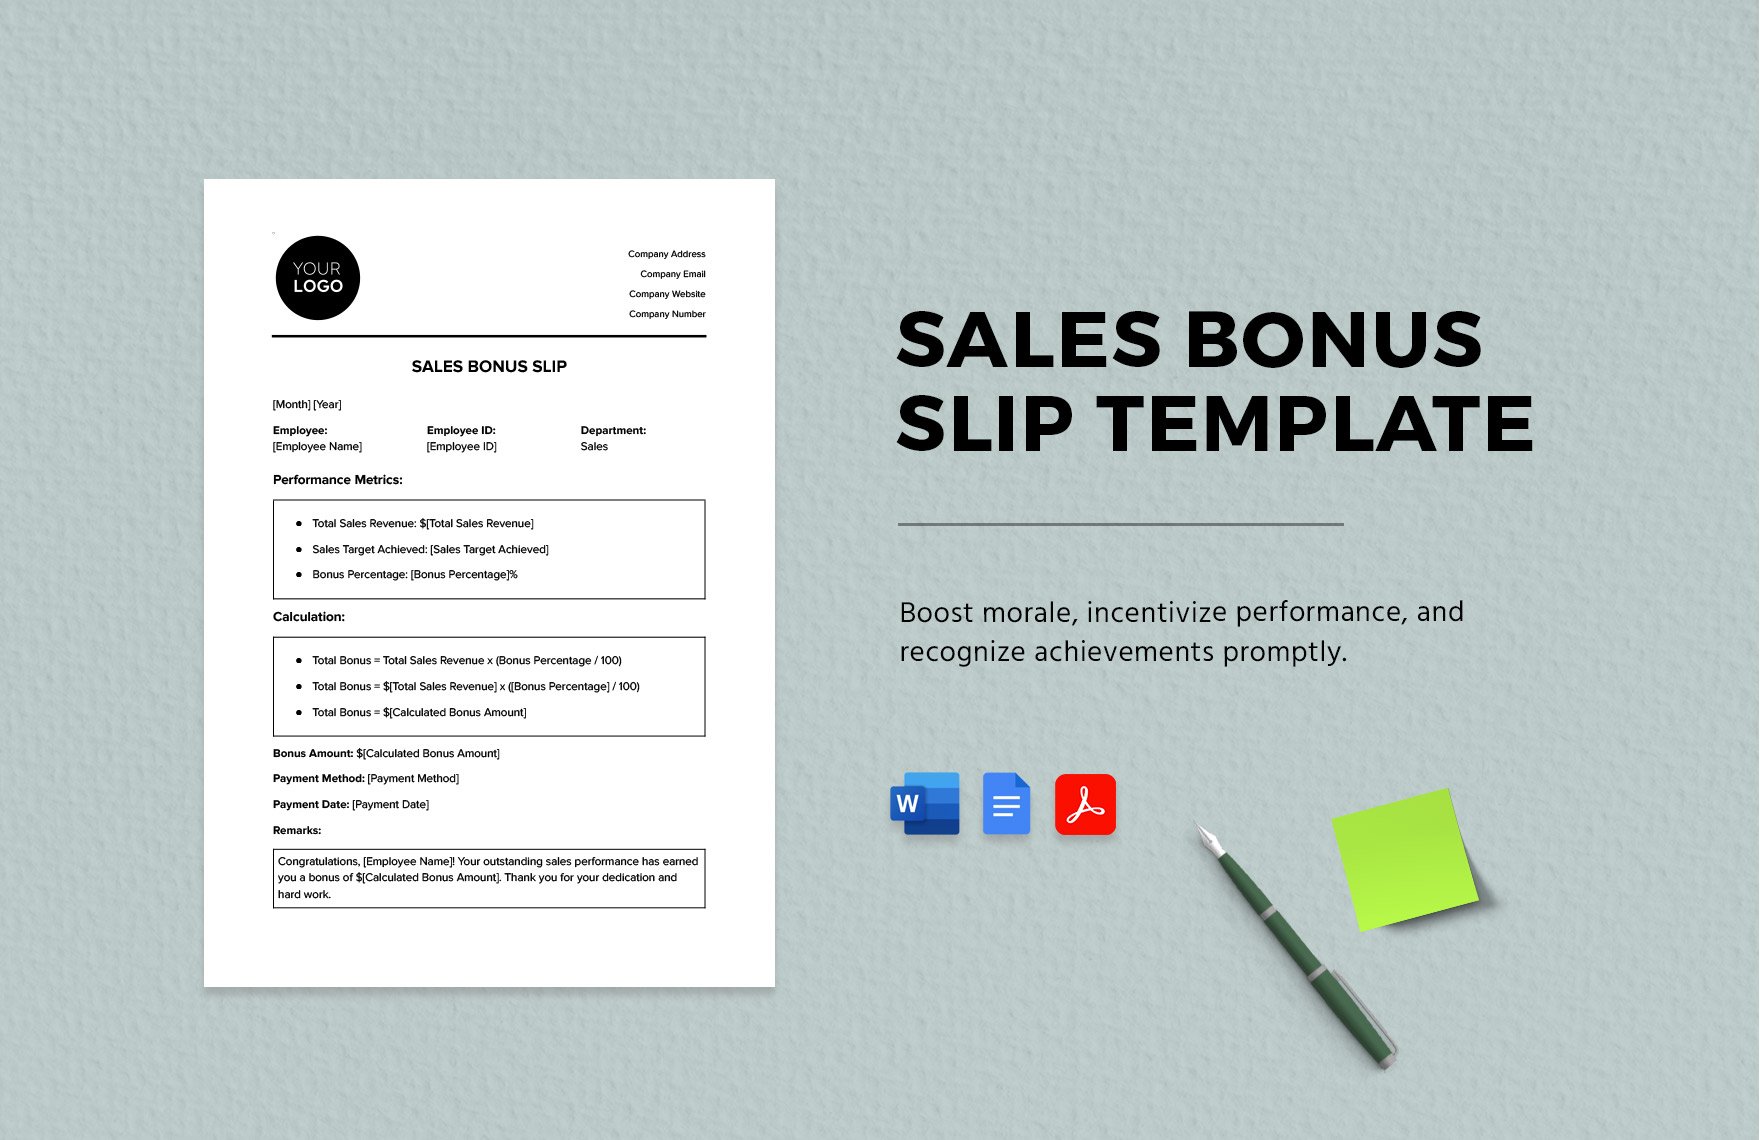 Sales Bonus Slip Template in Word, Google Docs, PDF